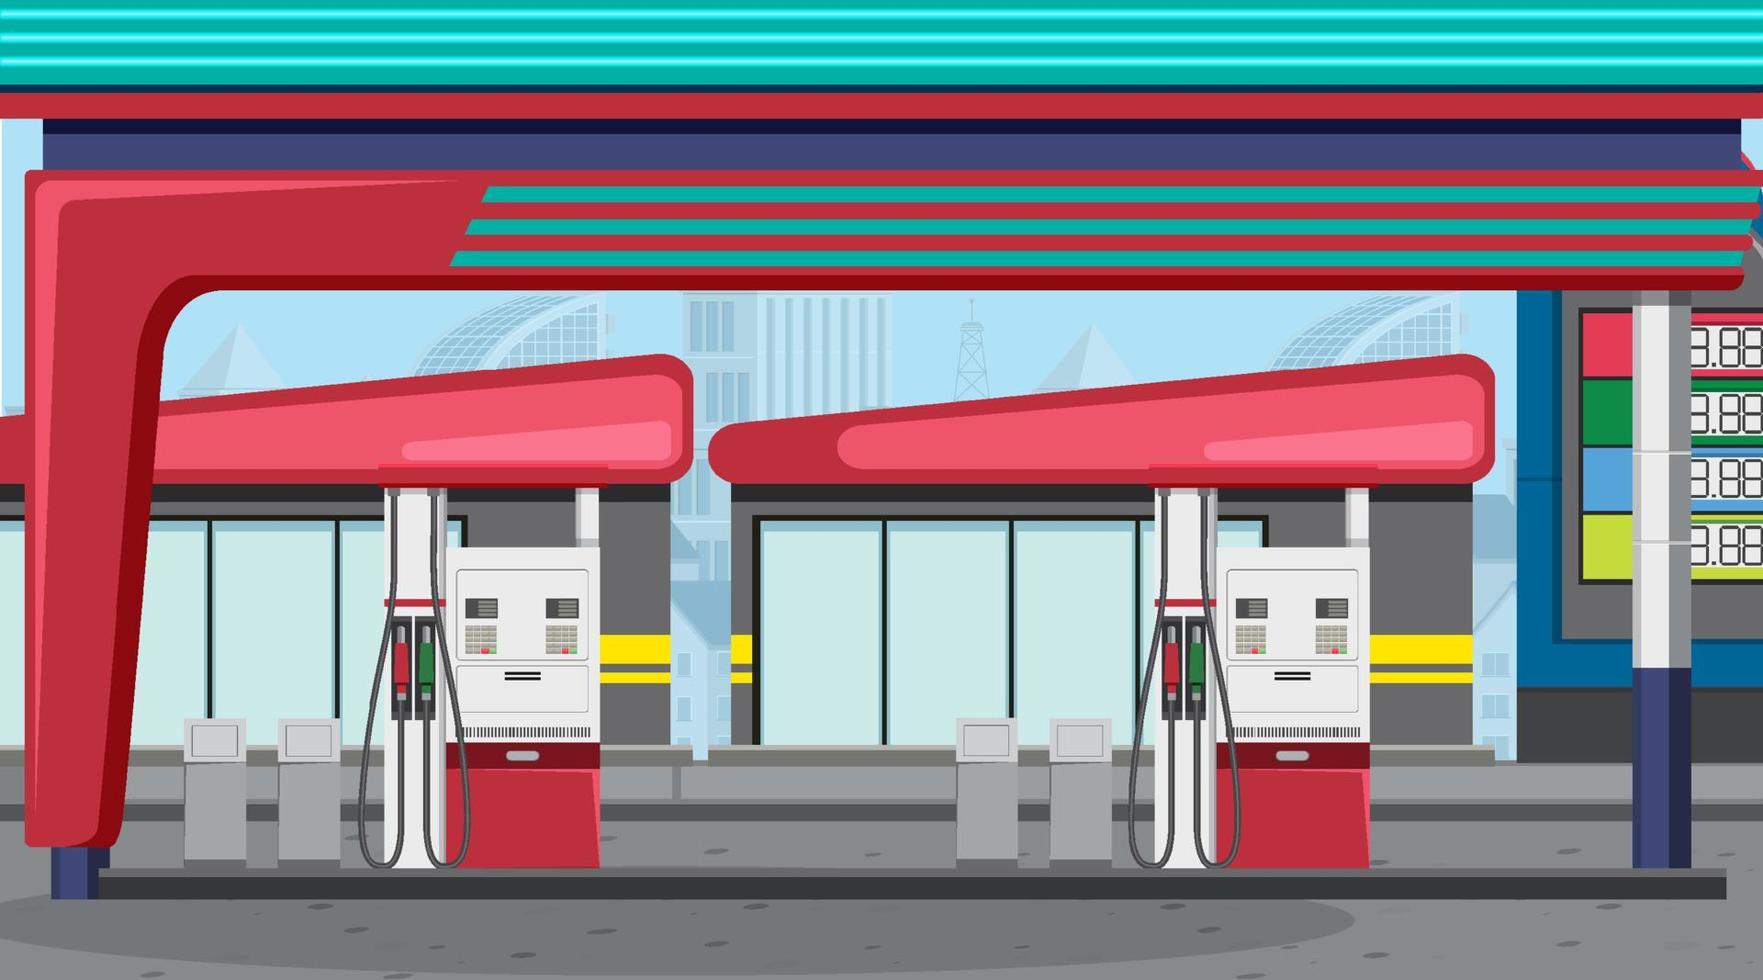 Gas station cartoon scene vector